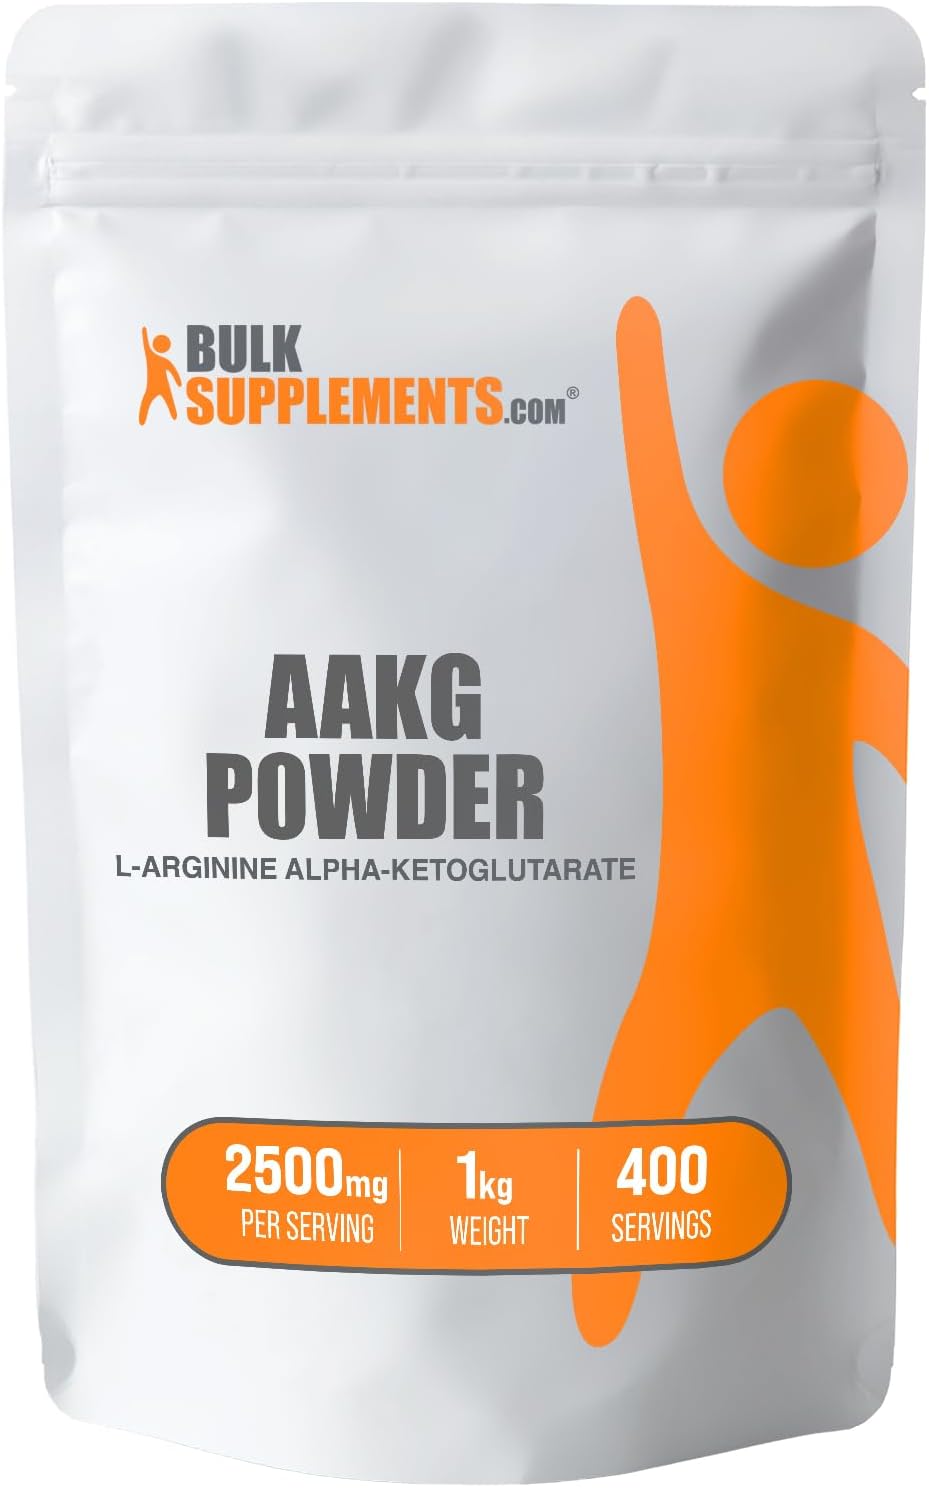 BULKSUPPLEMENTS.COM AAKG Powder - Arginine Alpha-Ketoglutarate, AKG Supplement - Arginine Supplement, Unflavored & Gluten Free, 2500mg per Serving, 1kg (2.2 lbs) (Pack of 1)